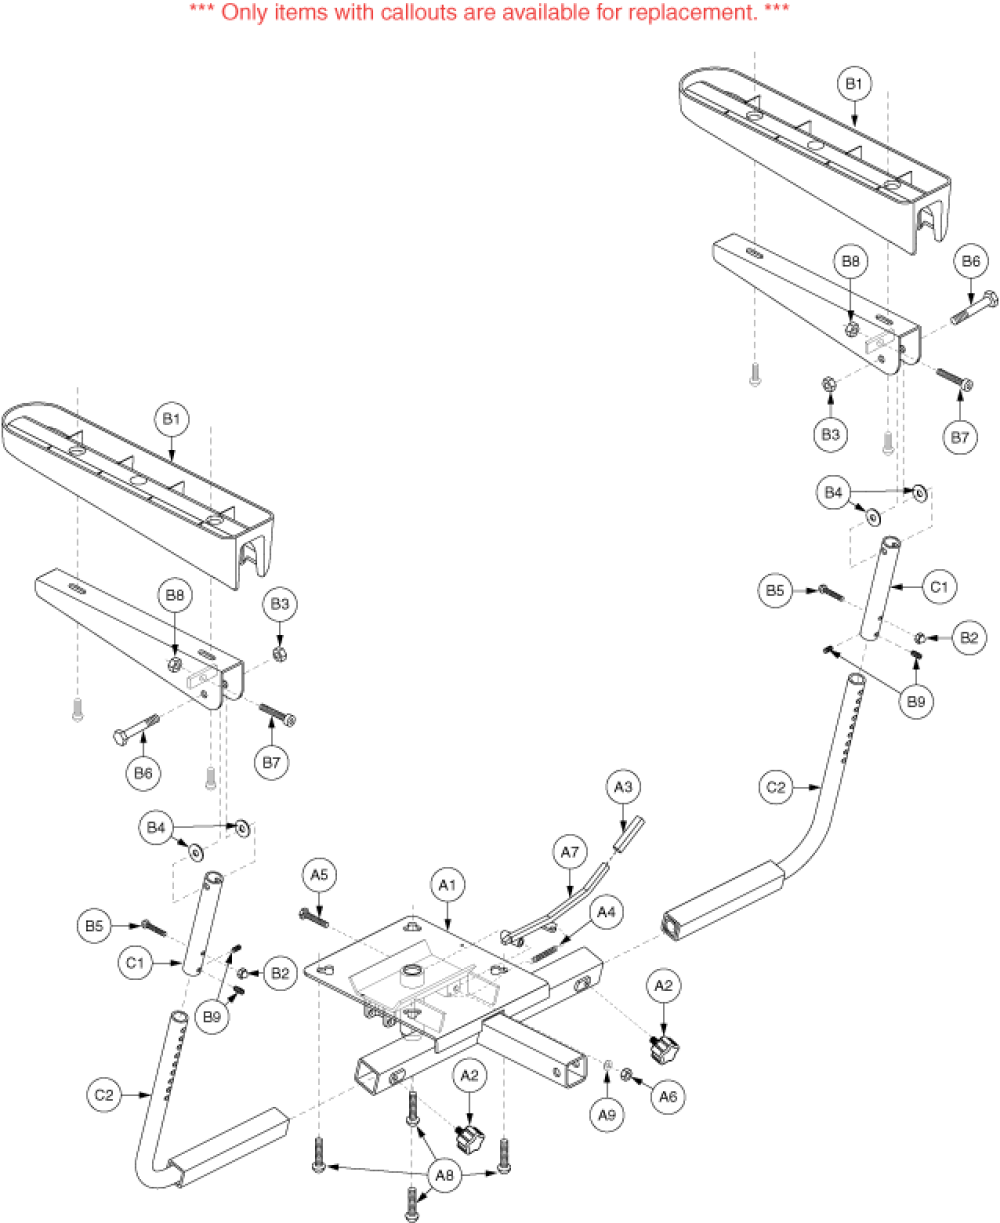 Seat Frame Pinchless 5170 parts diagram